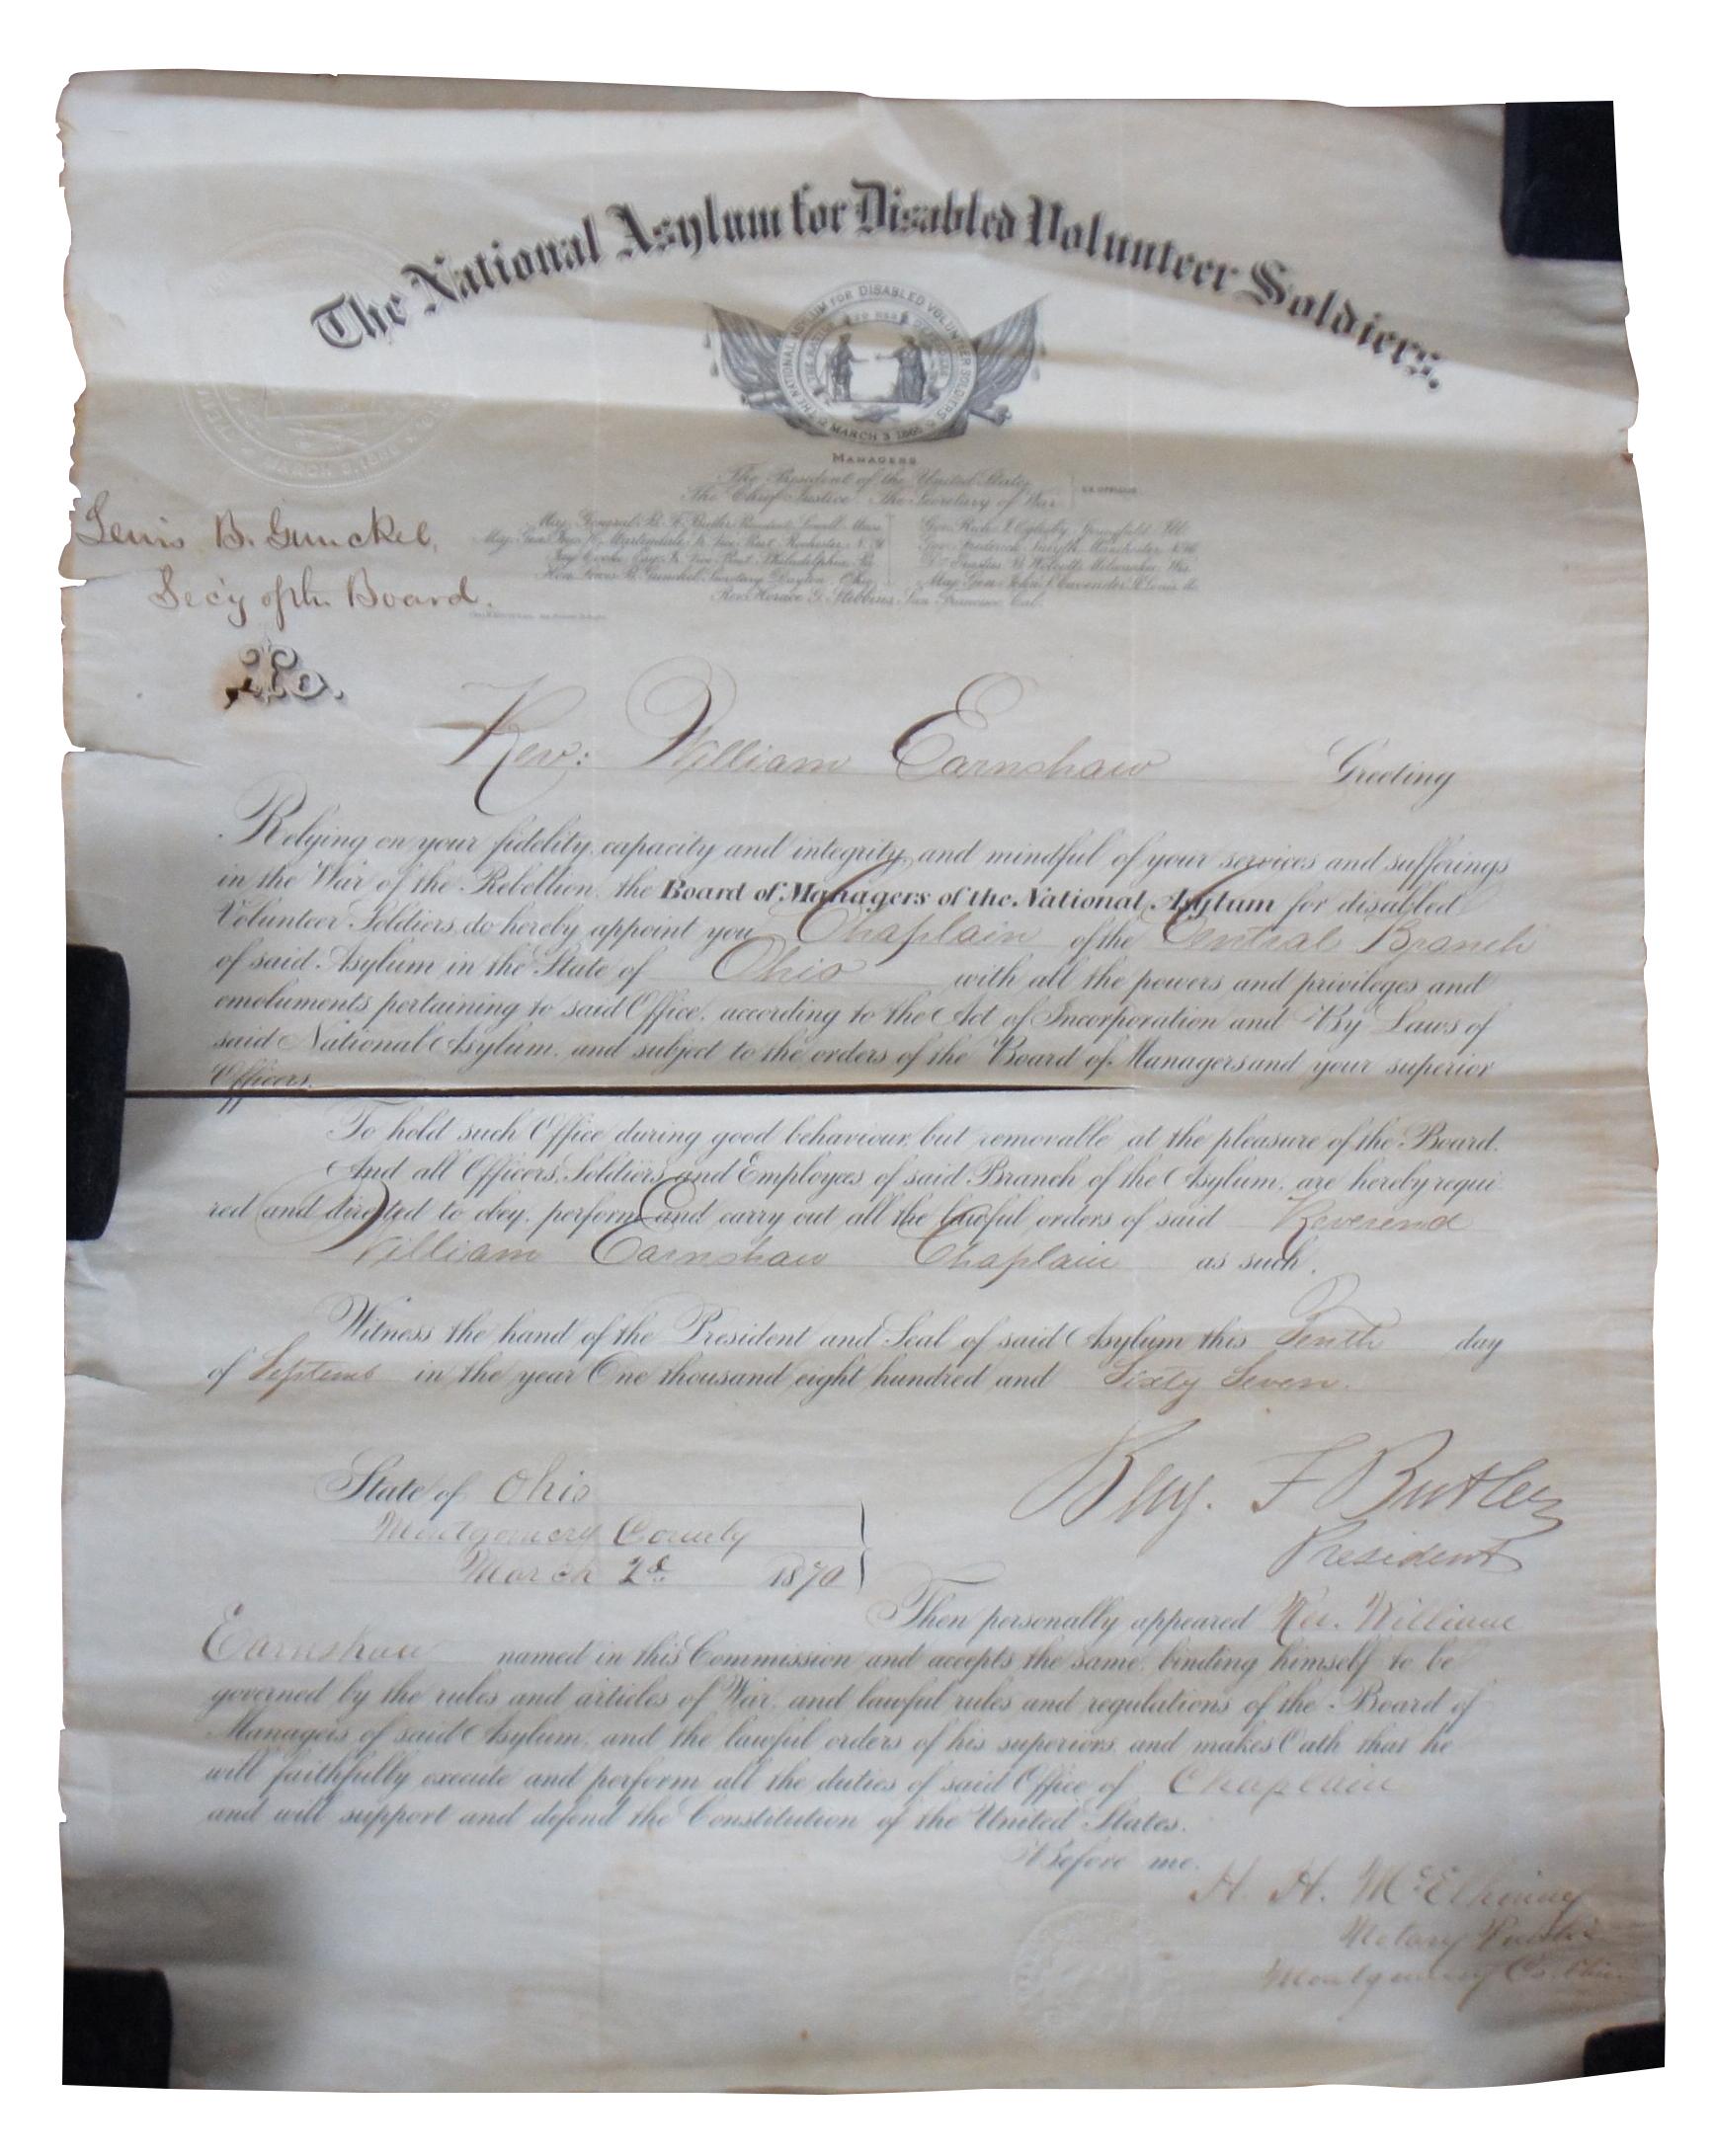 American Classical 1860s Civil War Document Certificate Chaplain Earnshaw 49th Penn Infantry 15